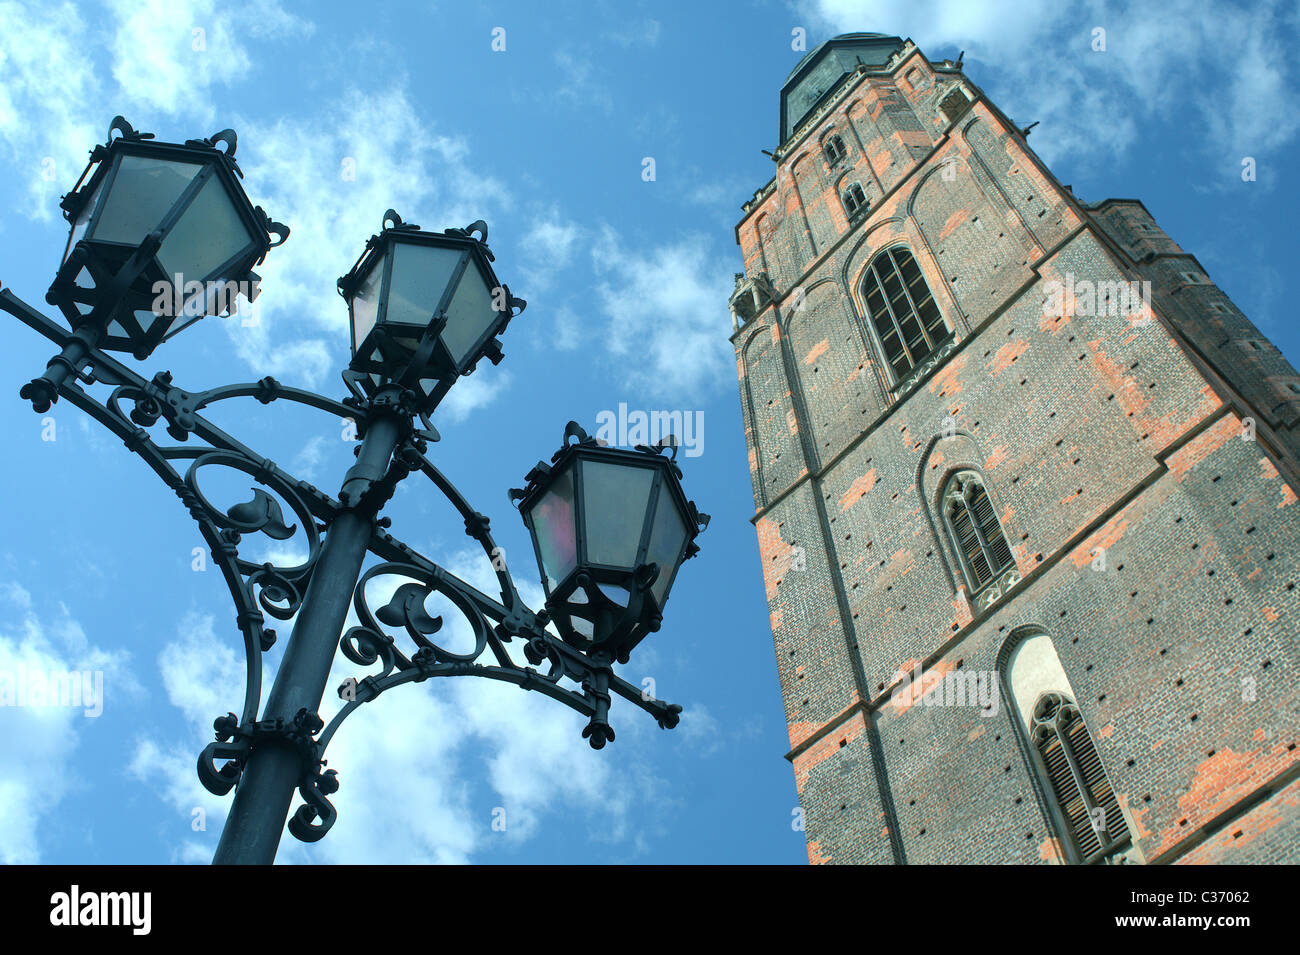 Saint Elizabeth gothic church tower and street lamp Wroclaw Poland Stock Photo